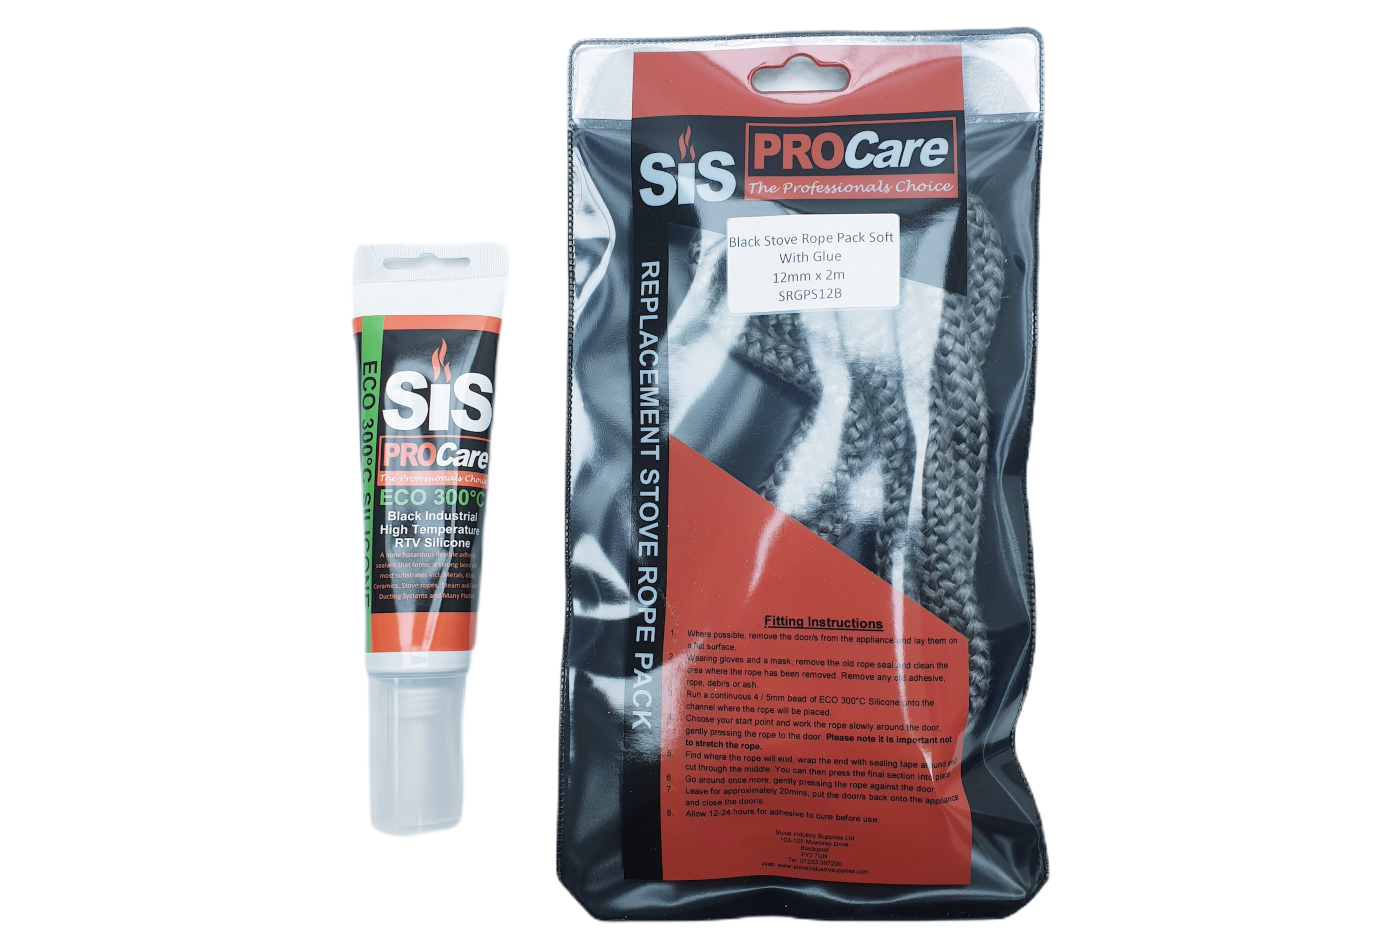 SiS Procare Black 12 milimetre x 2 metre Black Soft Stove Rope & 80 millilitre Rope Glue Pack - product code SRGPS12B